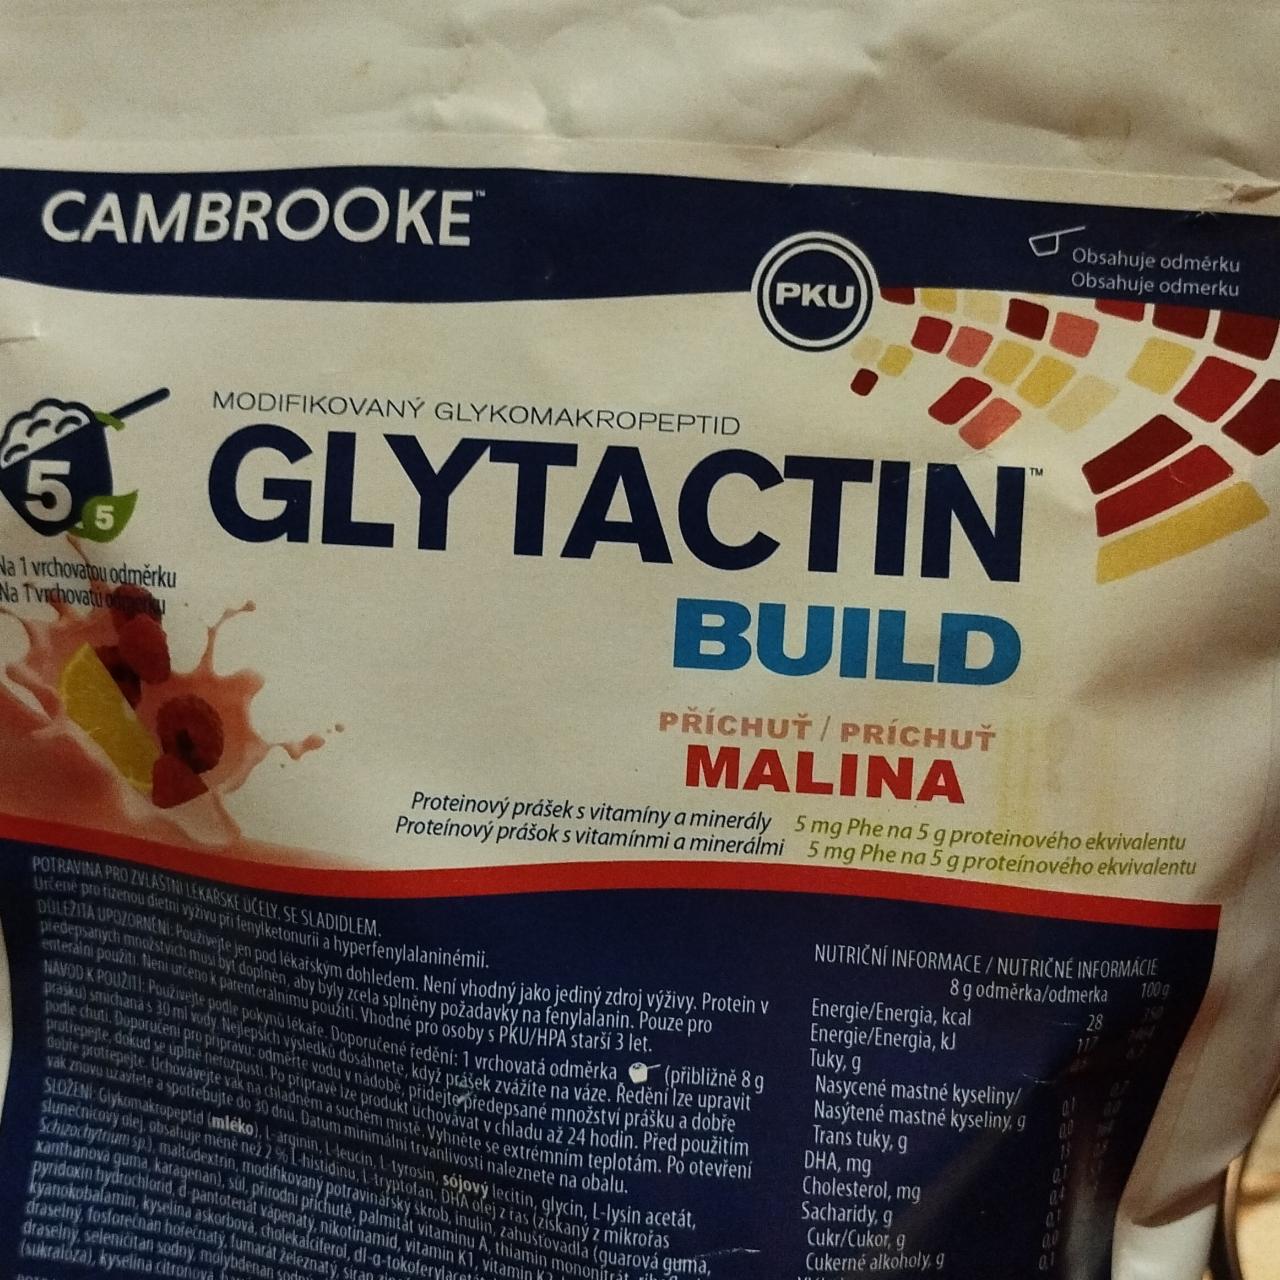 Fotografie - Glytactin Build Malina PKU Cambrooke